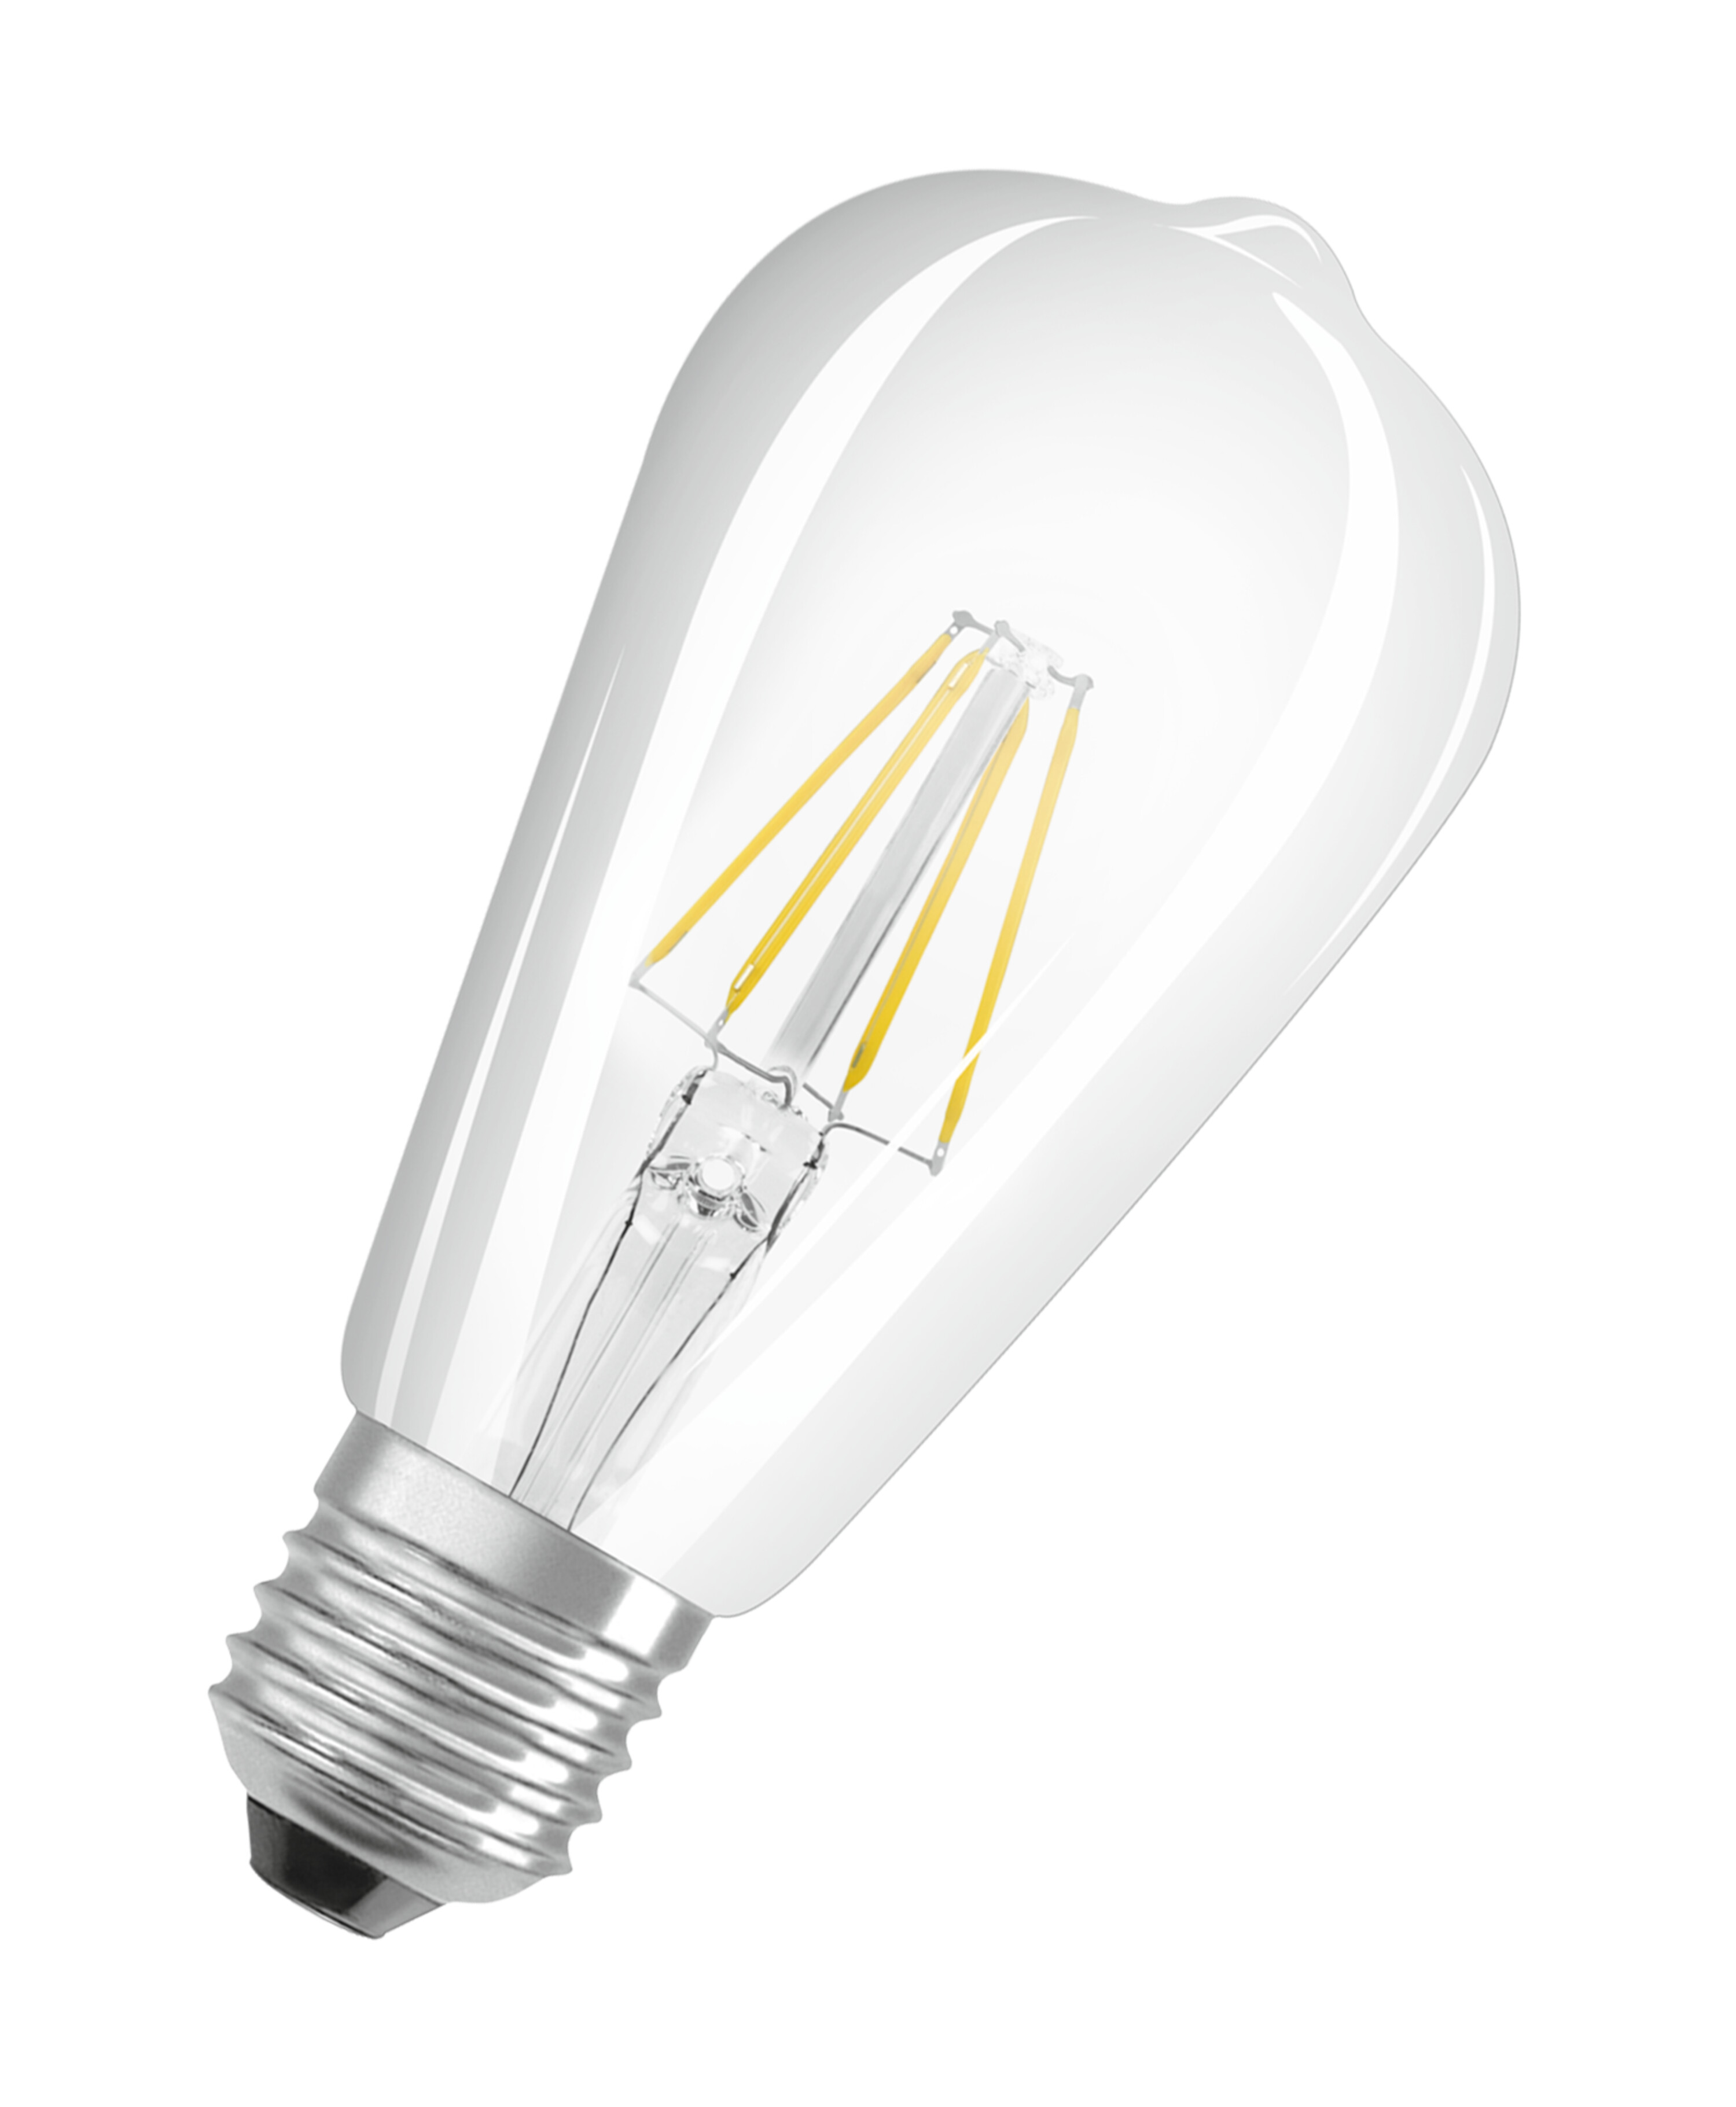 806 PLUS SUPERSTAR EDISON Lampe Lumen OSRAM  LED CLASSIC Kaltweiß FILAMENT LED